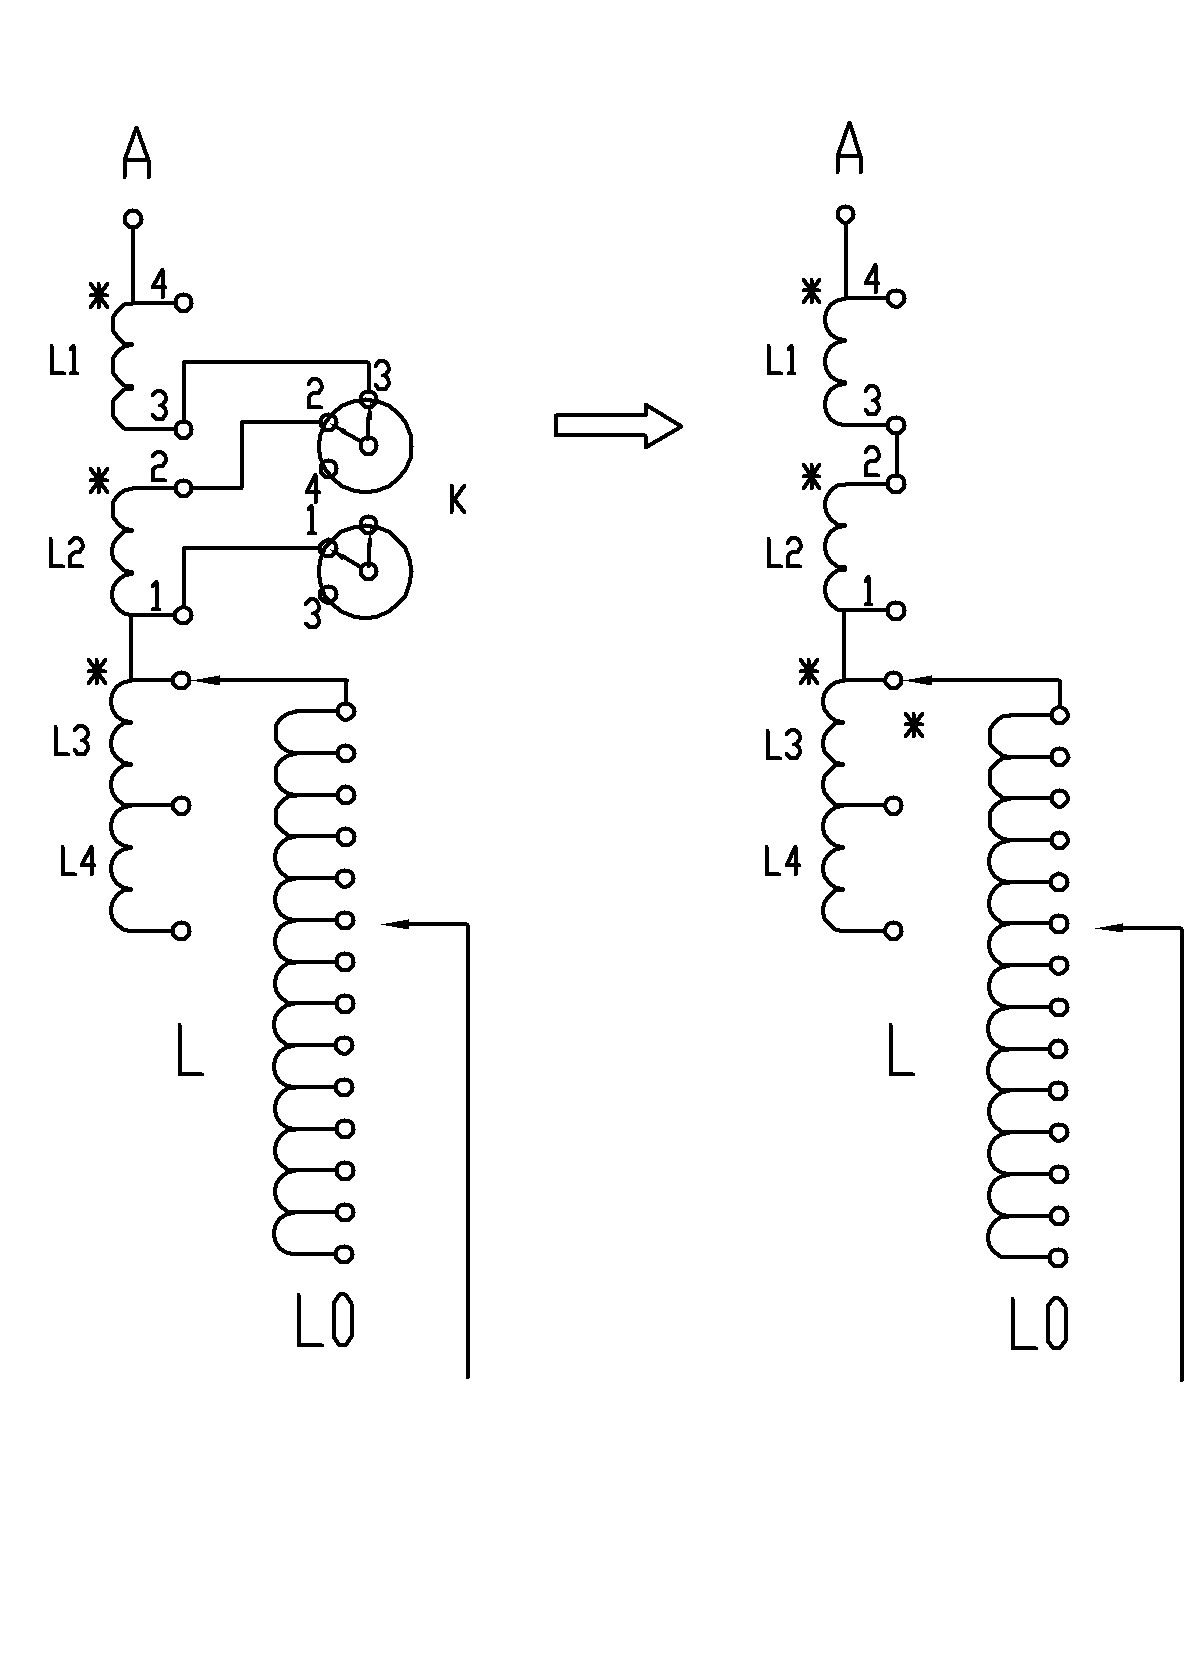 Single-body transformer having novel wiring structure